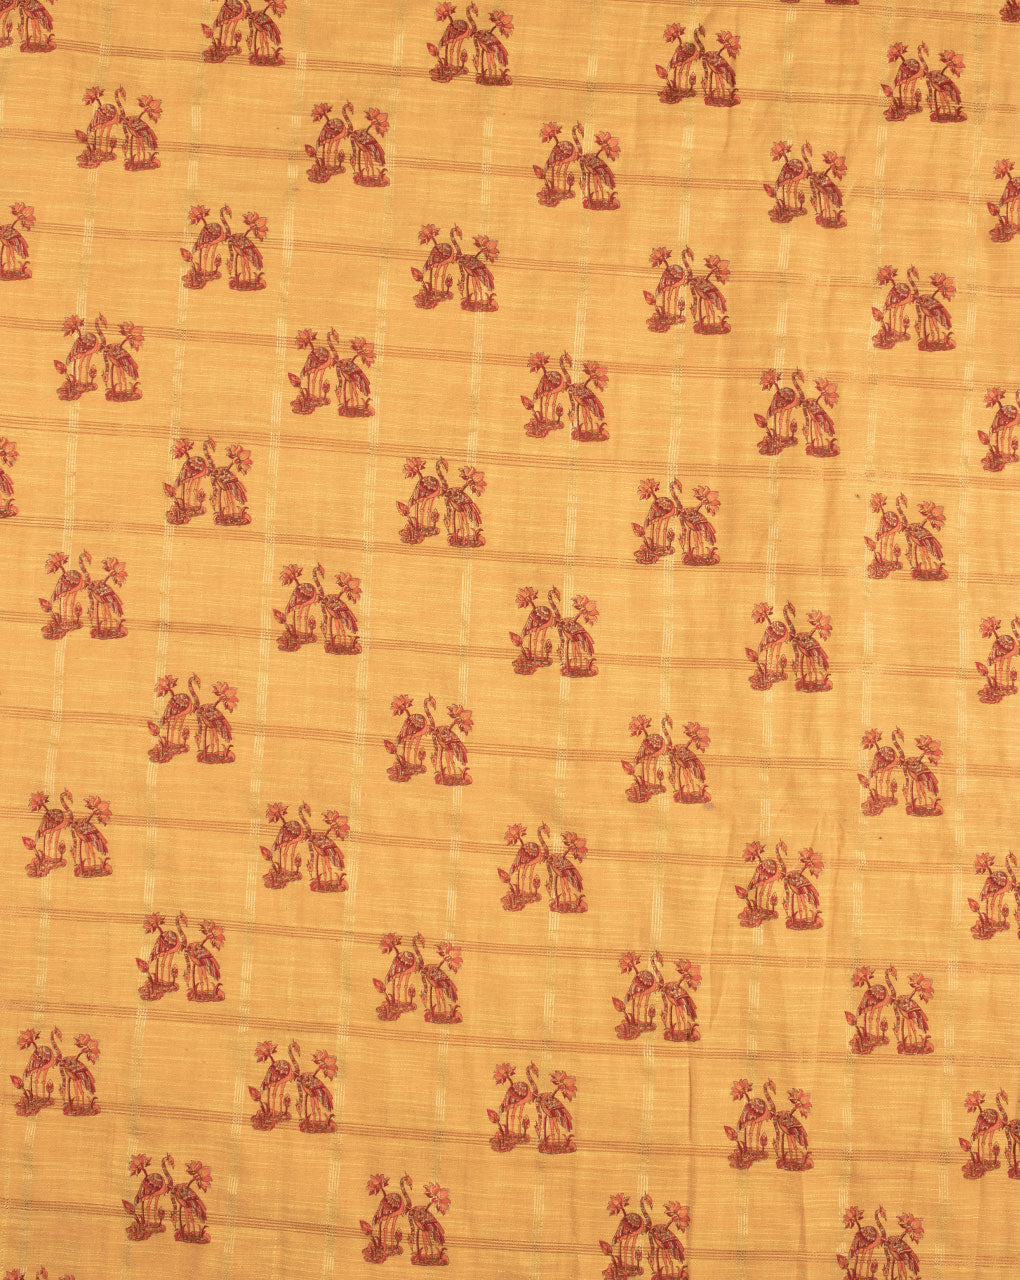 Screen Print Lurex Loom Textured Cotton Fabric - Fabriclore.com